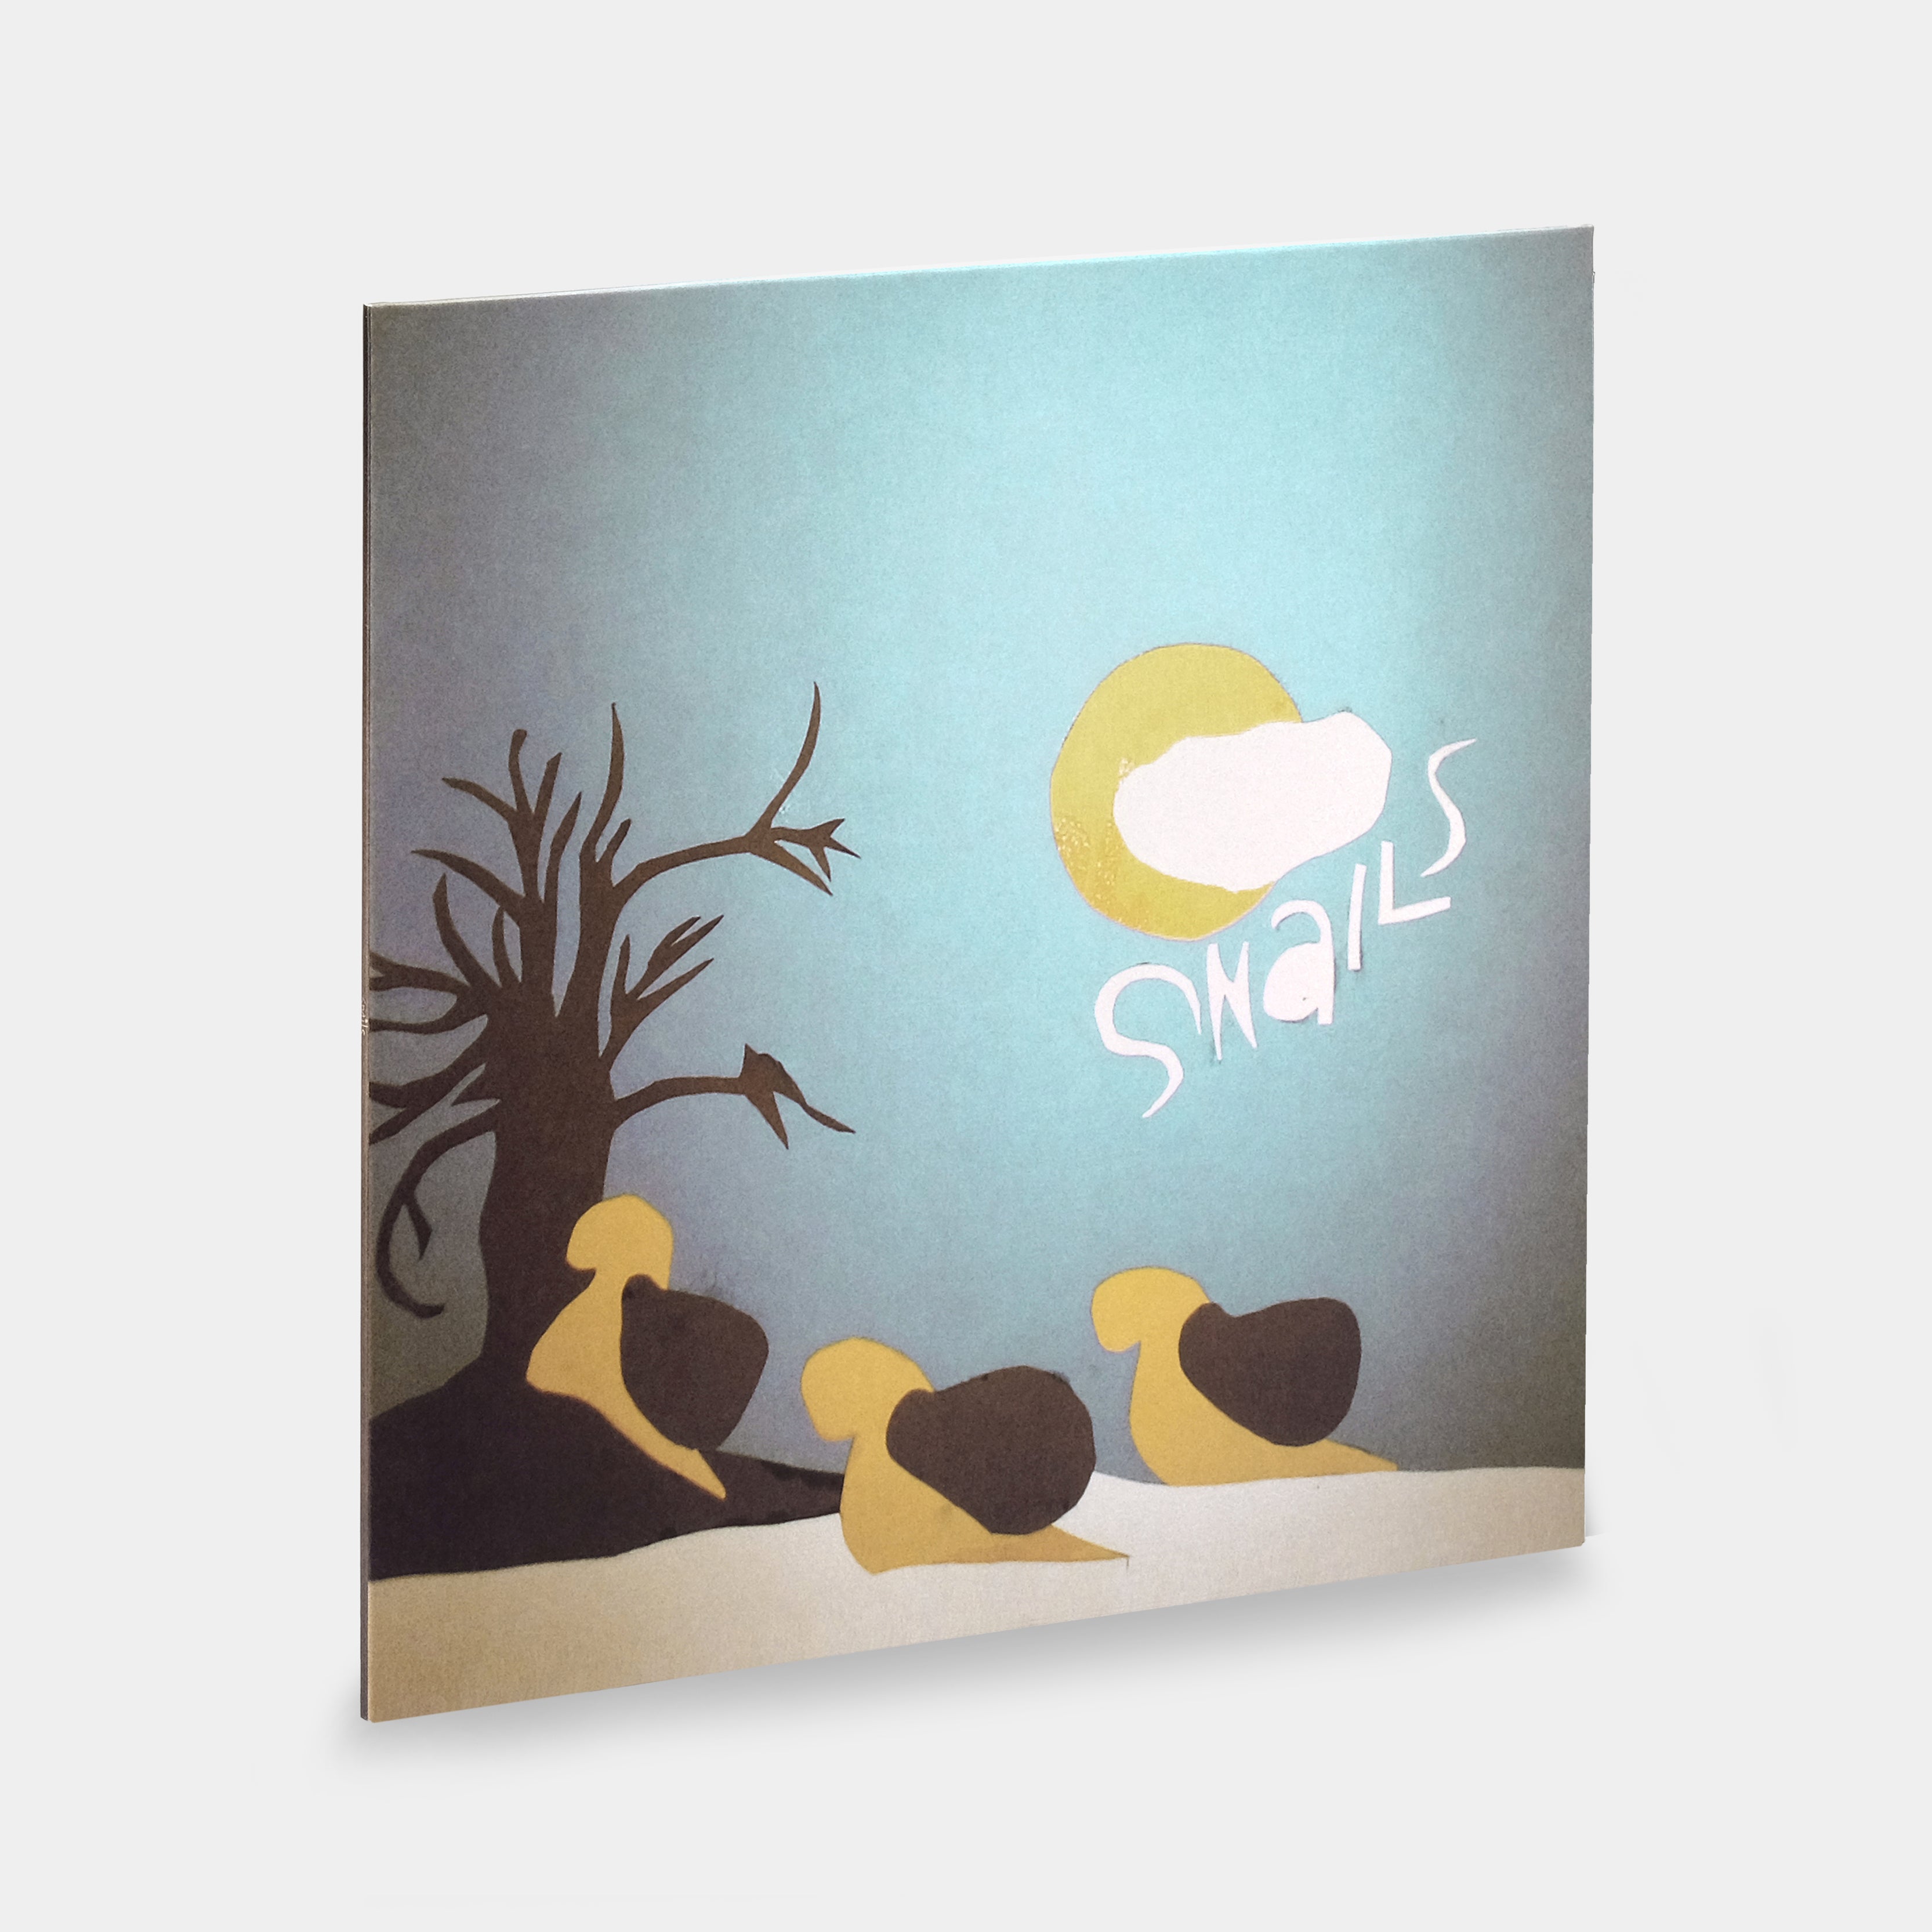 The Format - Snails EP Vinyl Record